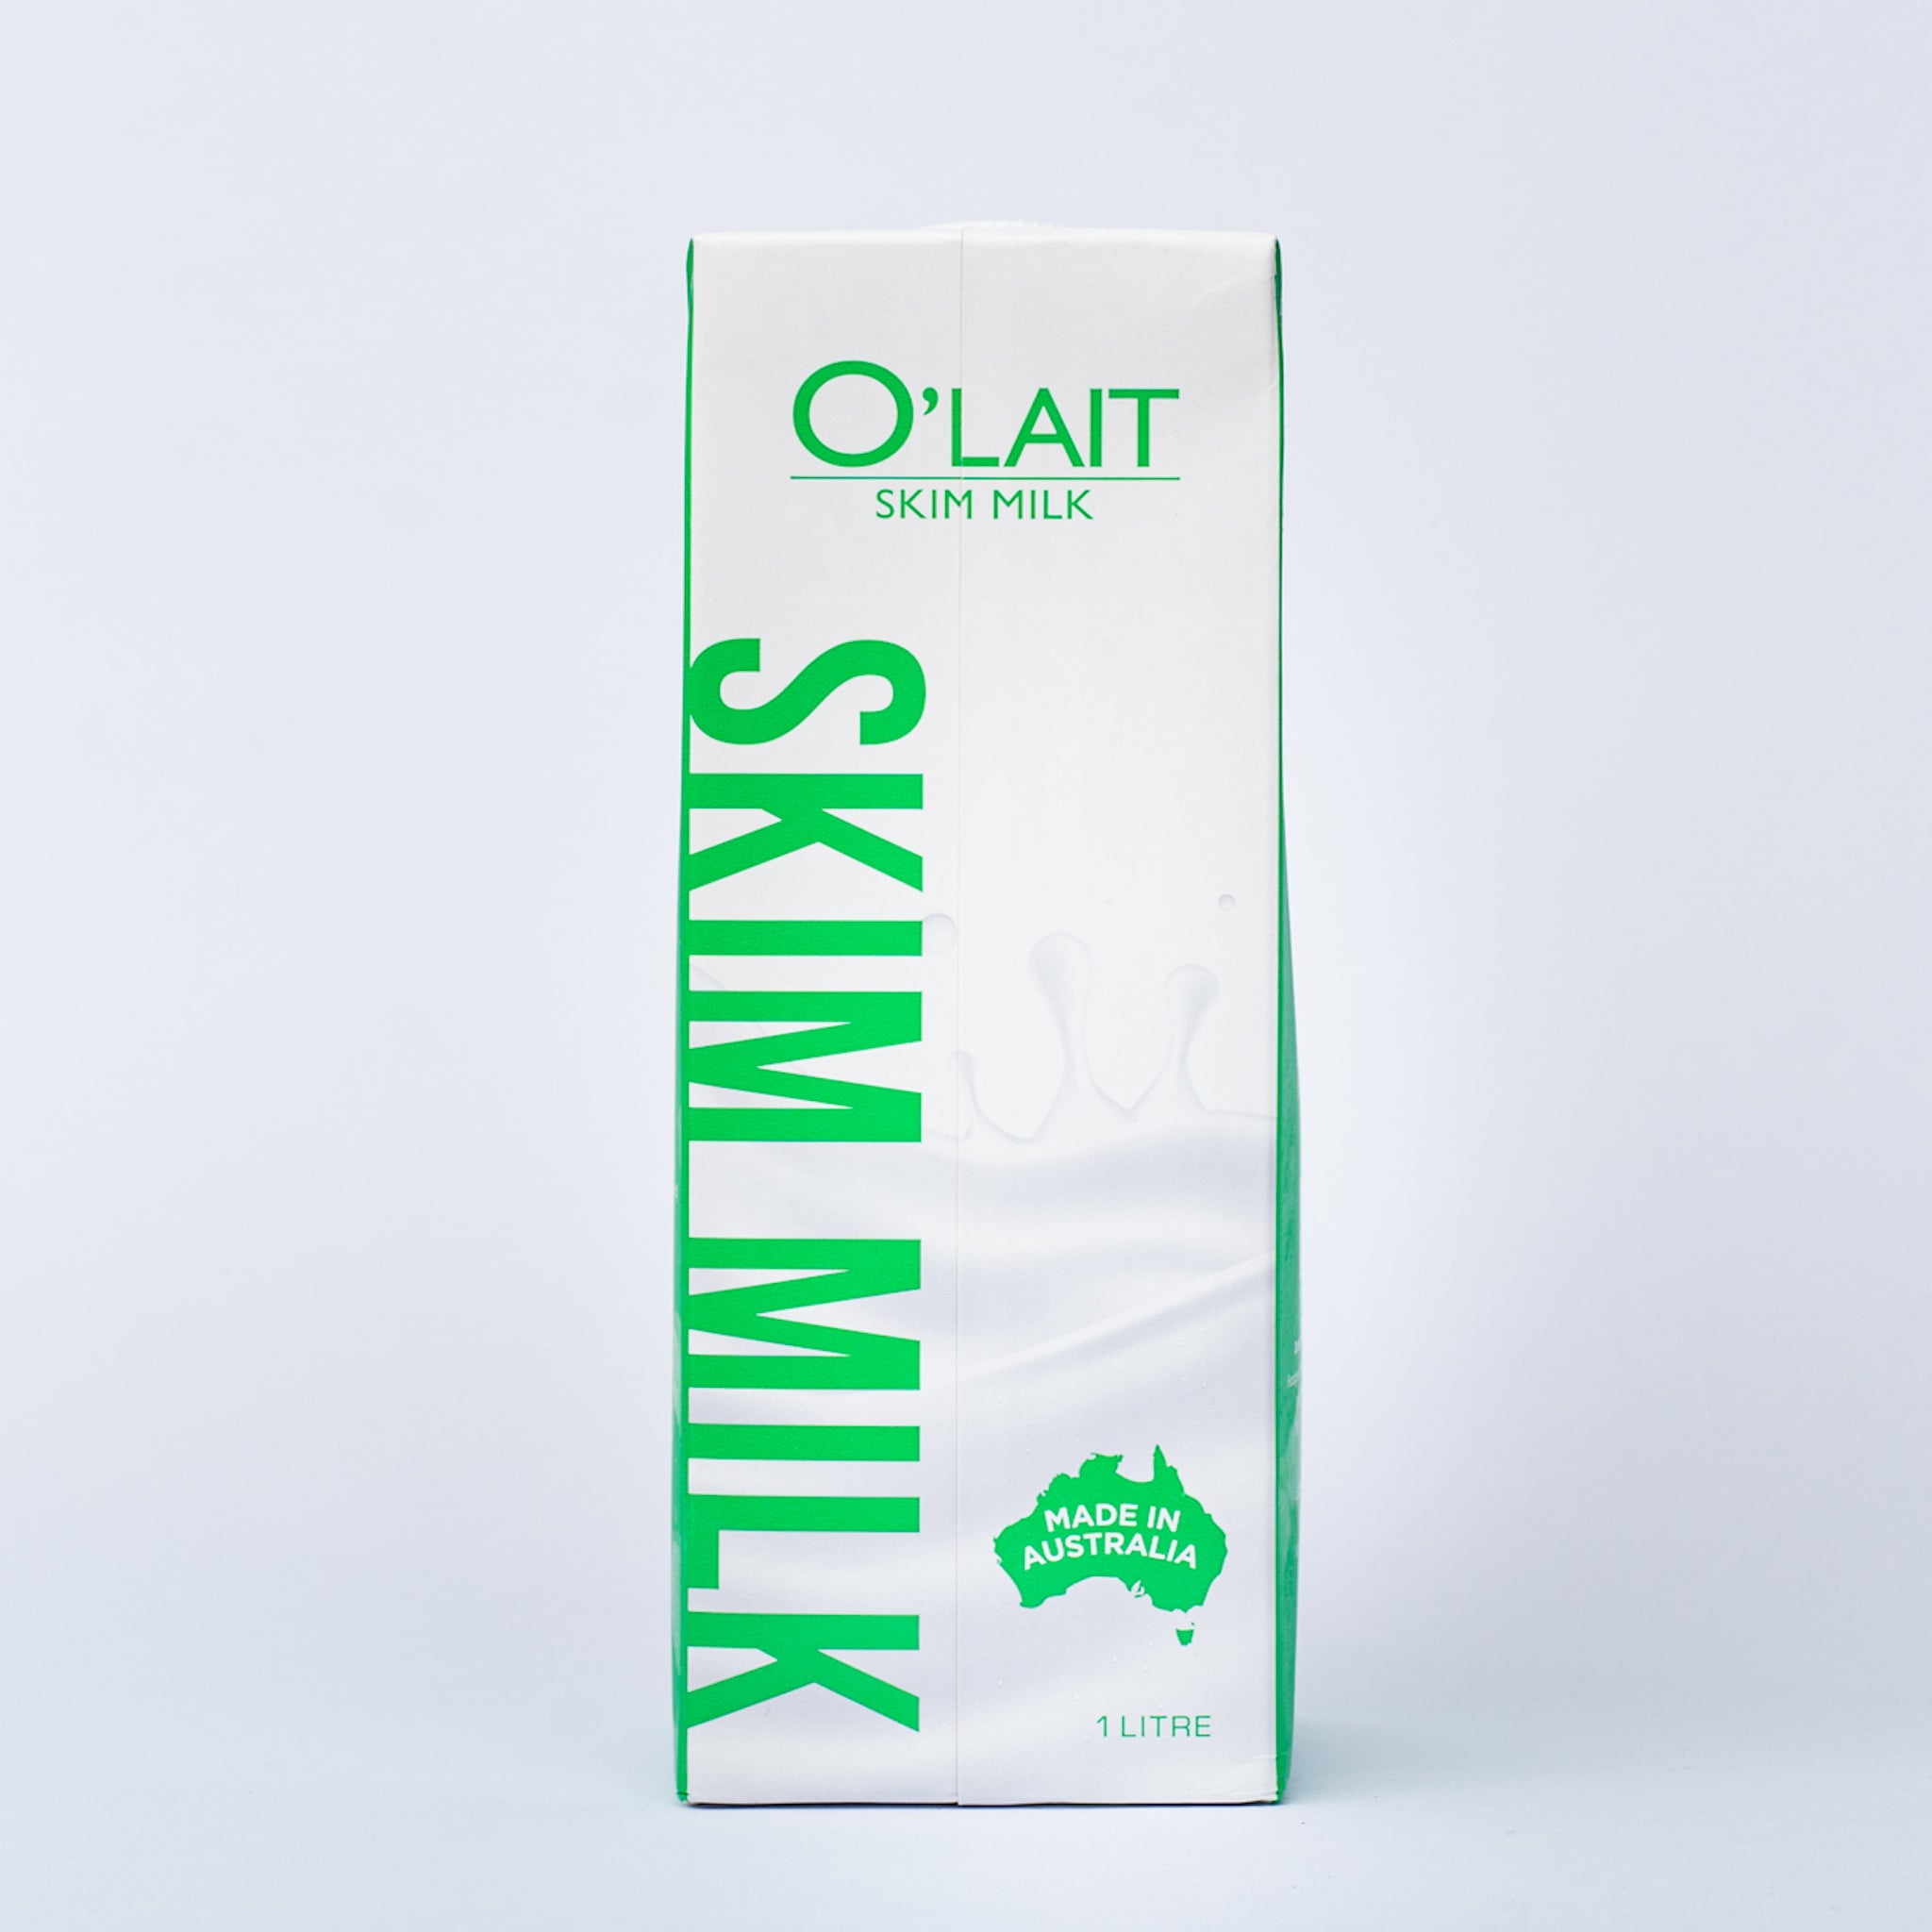 A tetra pack of O'Lait Fresh Australian Skim Milk 1L.